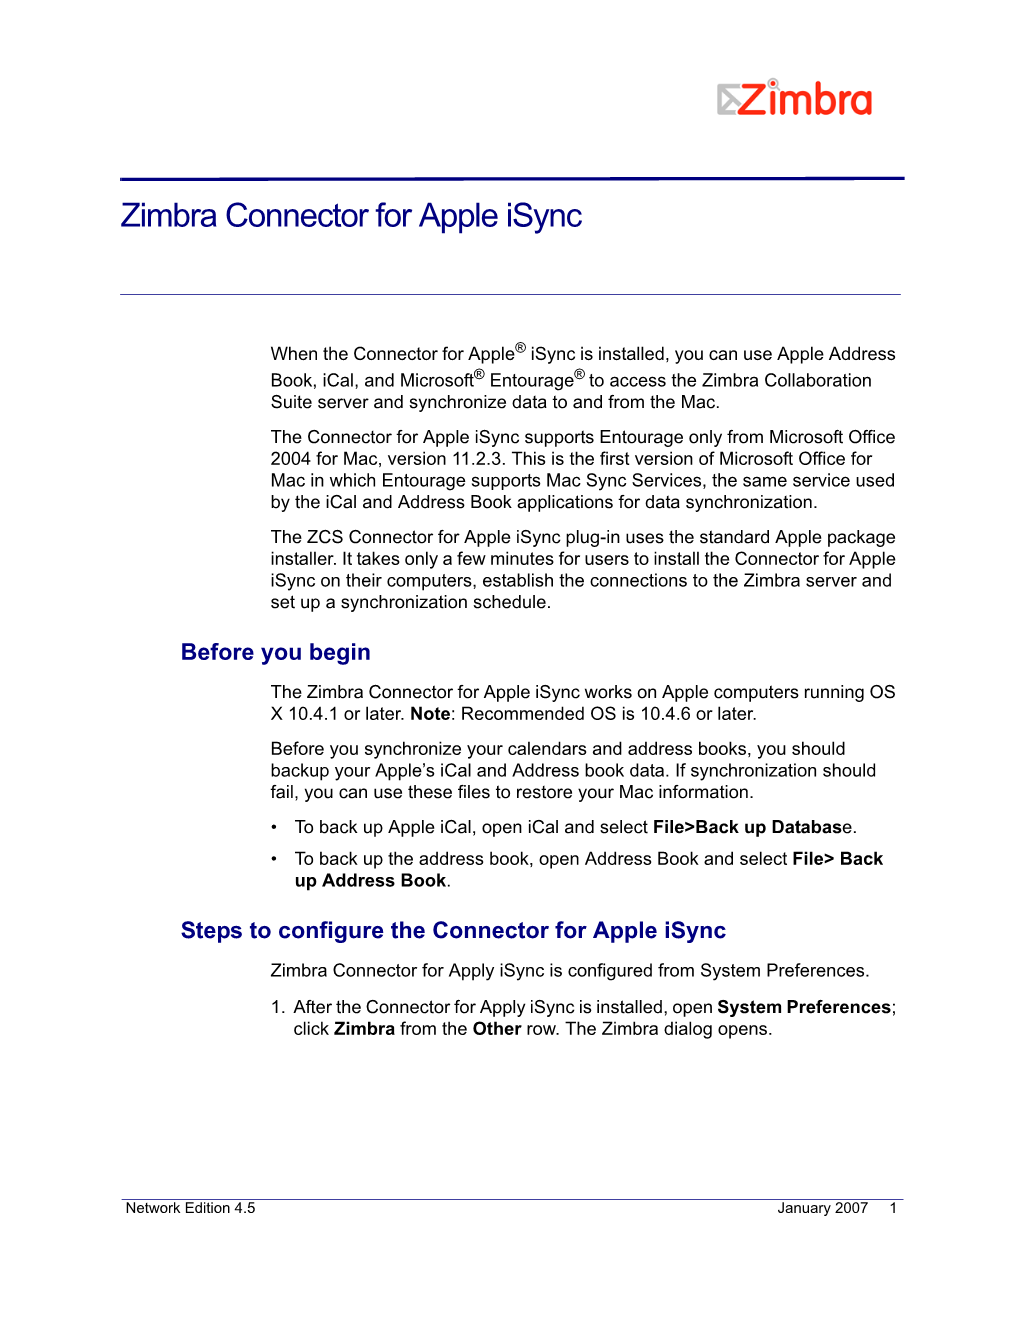 ZCS Apple Isync Final Working Copy.Fm